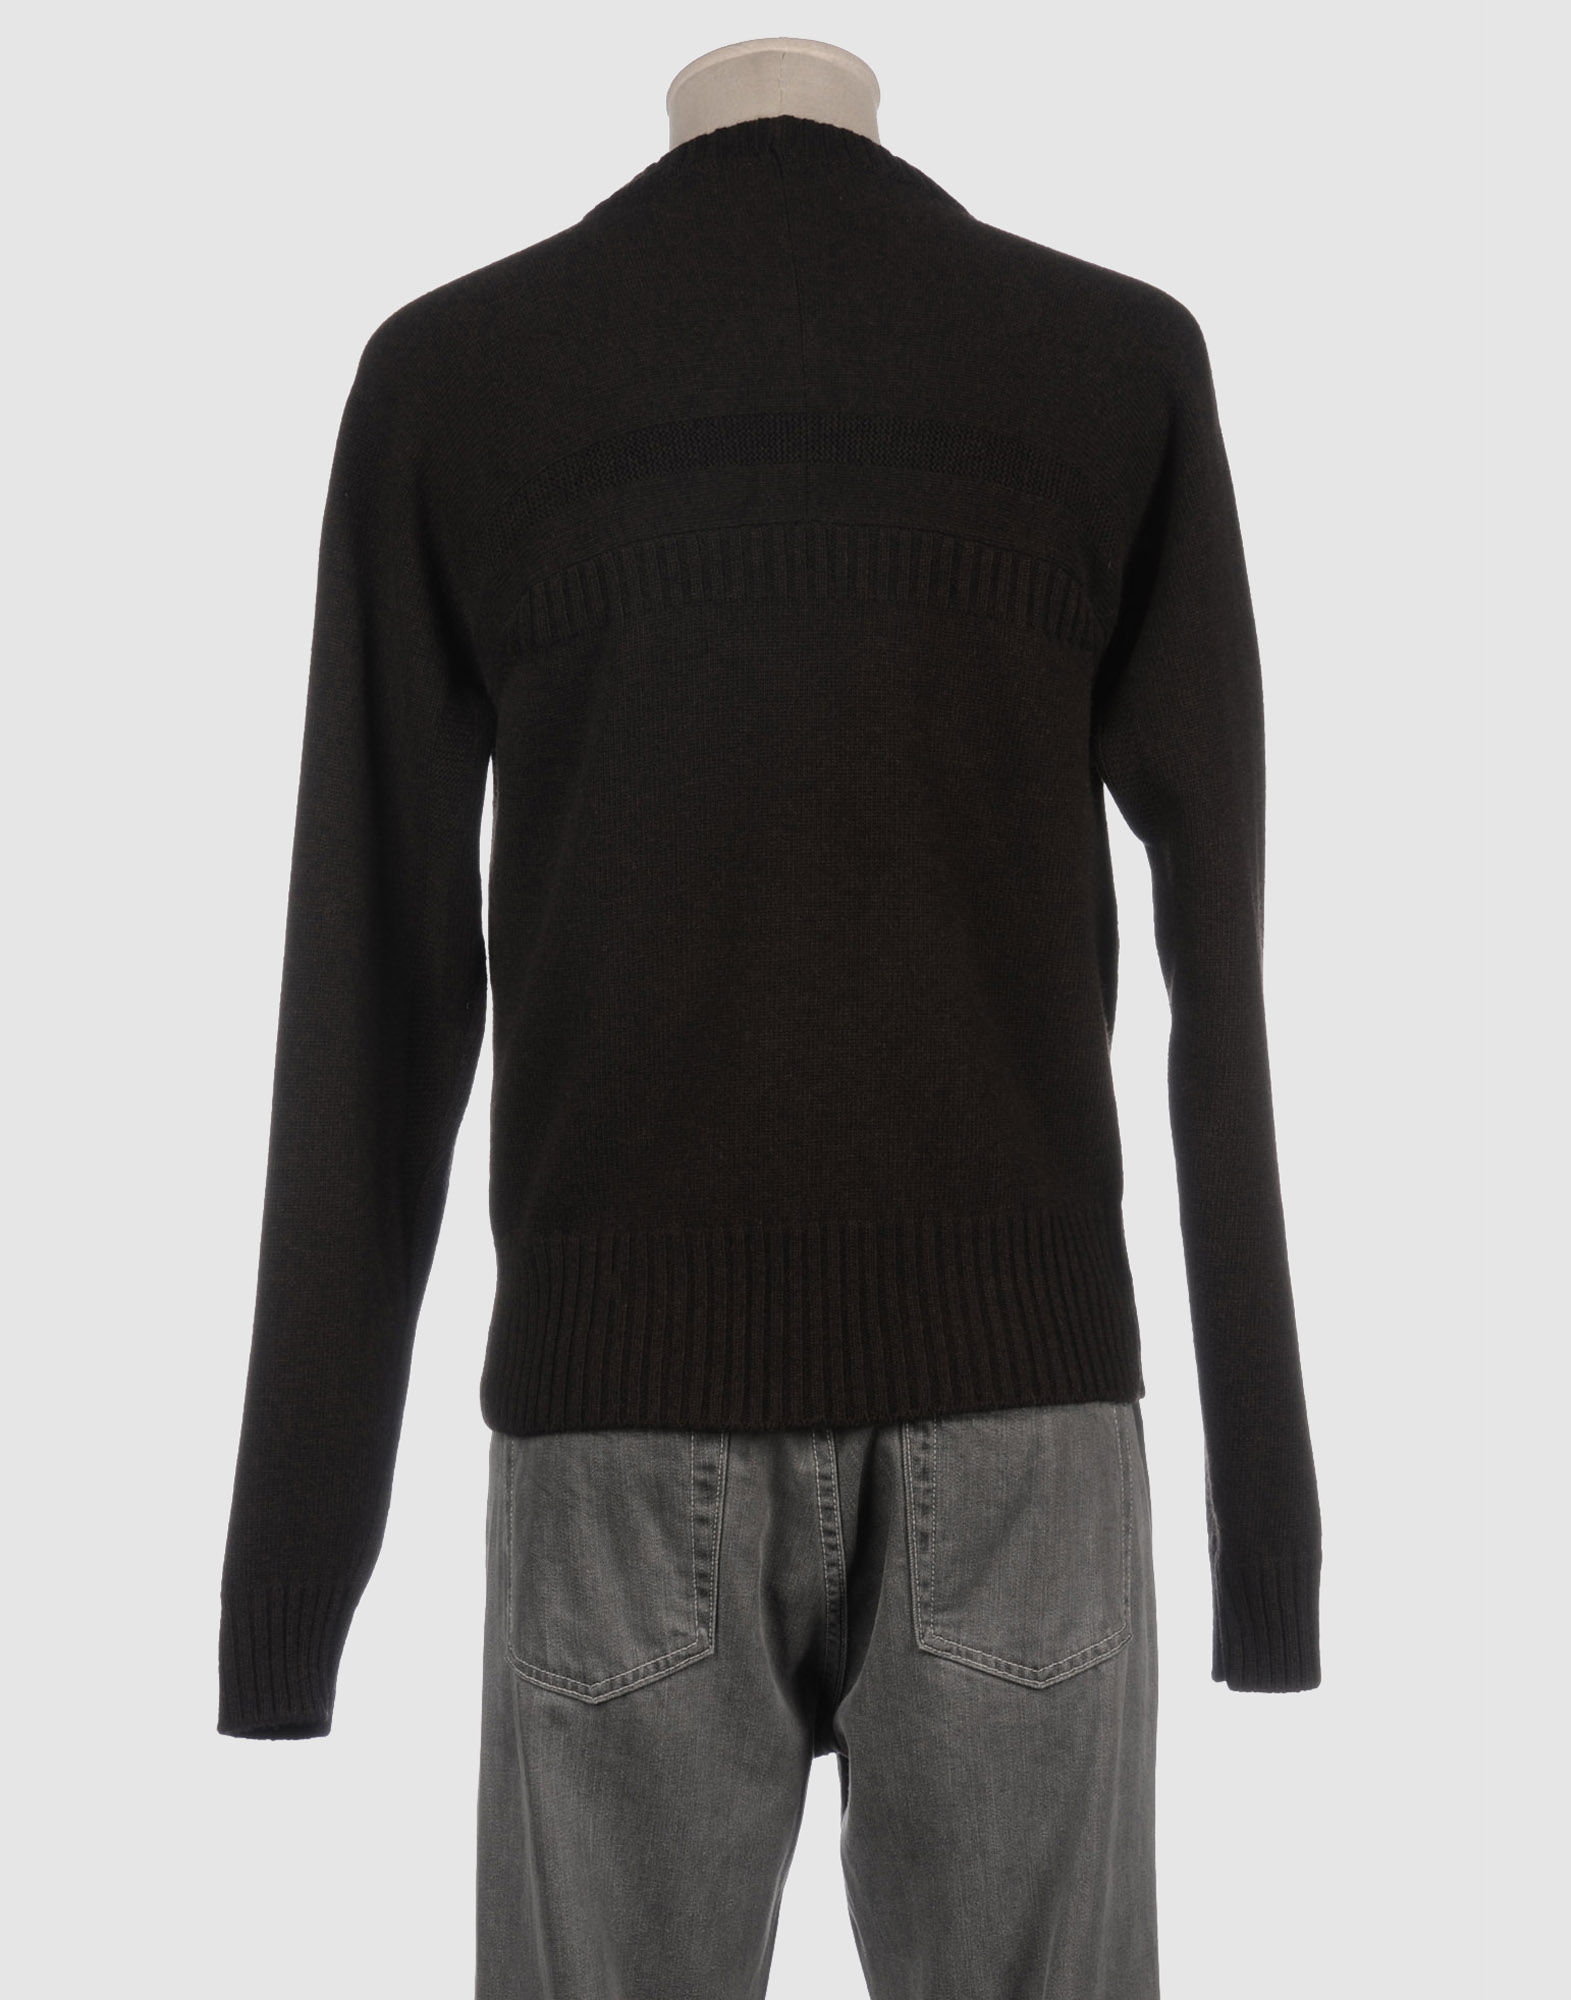 Yves saint laurent rive gauche Crewneck Sweater in Black for Men ...  